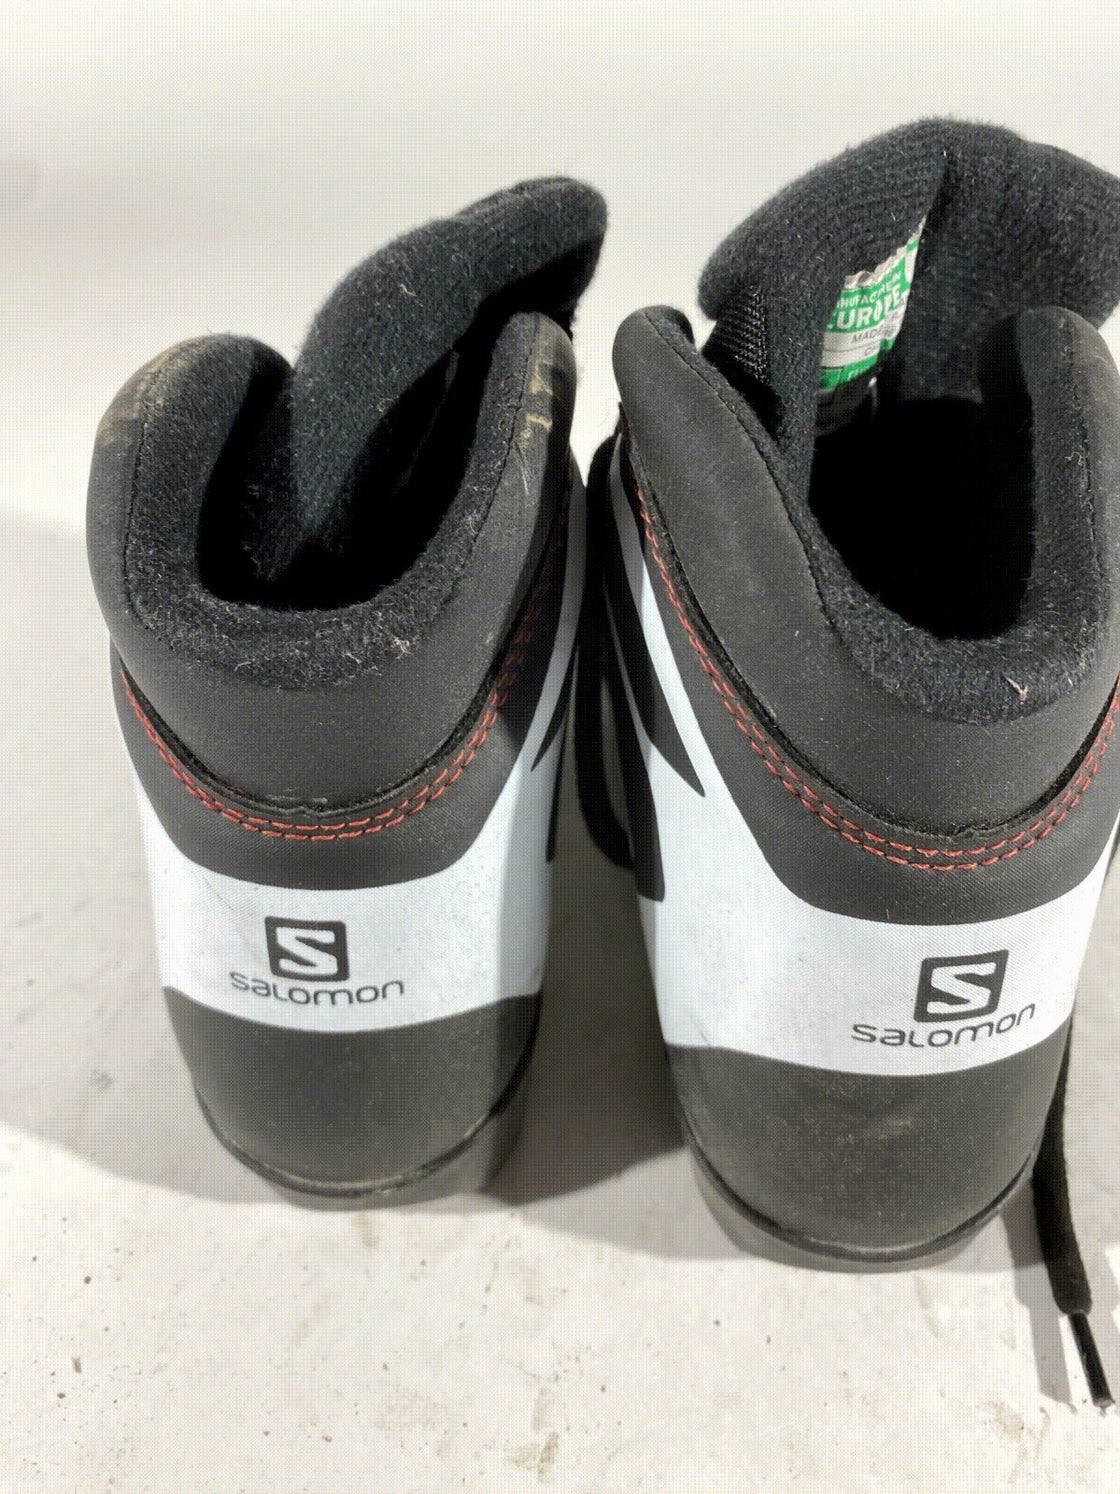 Salomon Team Nordic Cross Country Ski Boots Kids Size EU35.5 US3.5 Prolink S118